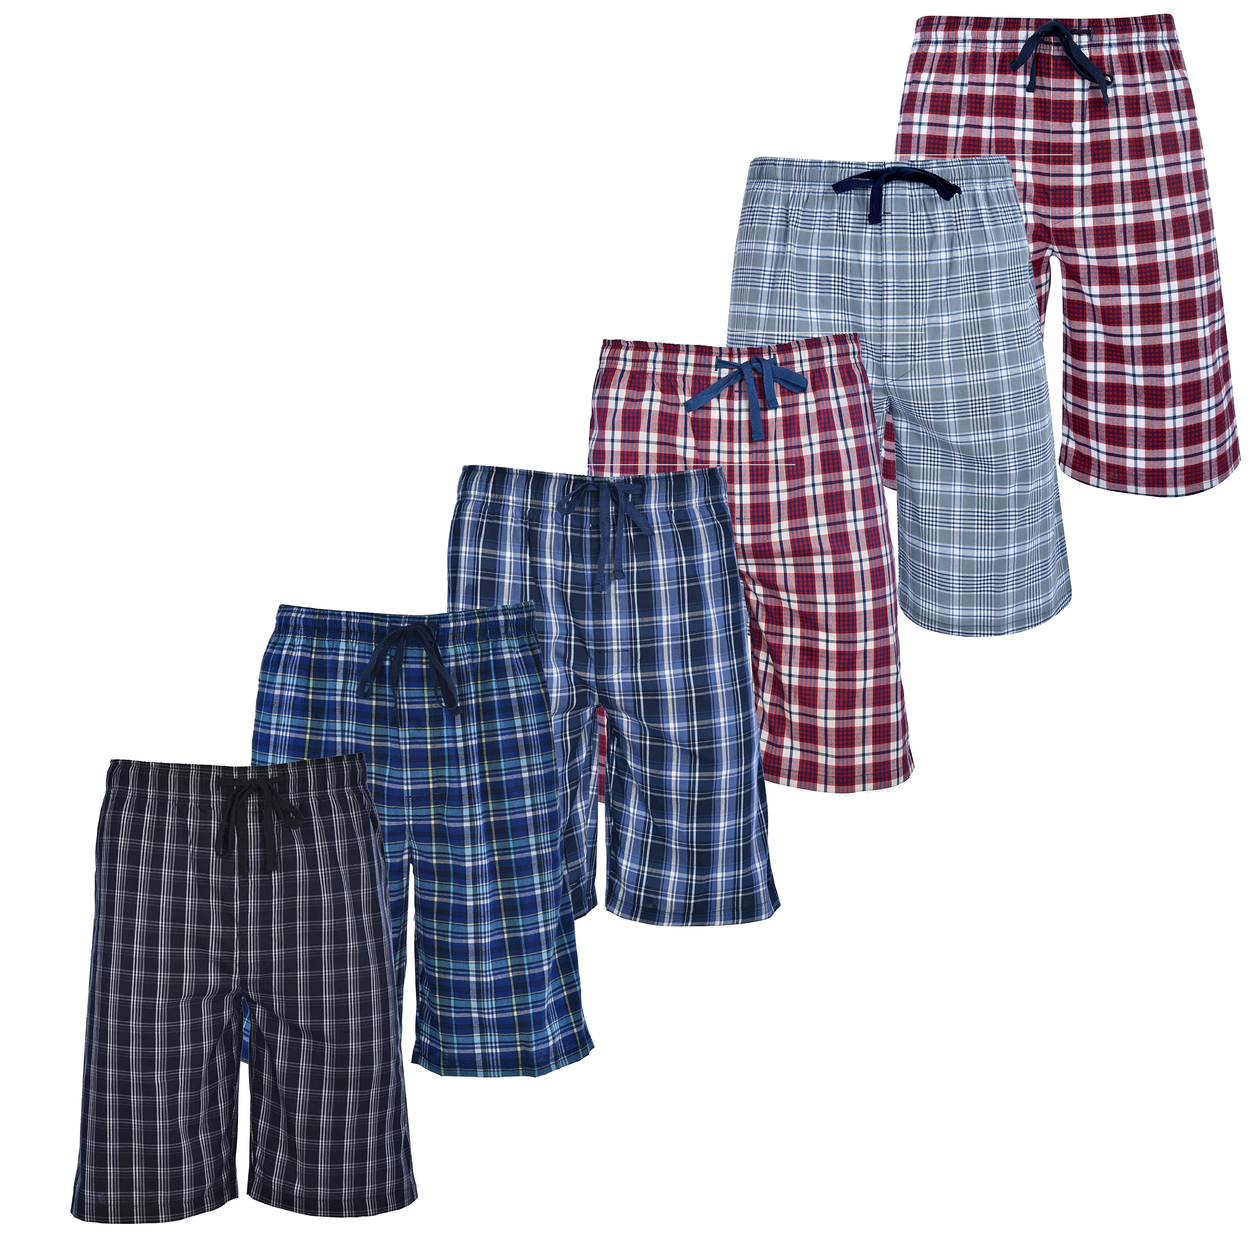 Multi-Pack: Men's Ultra Soft Plaid Lounge Pajama Sleep Wear Shorts - 3-pack, Small